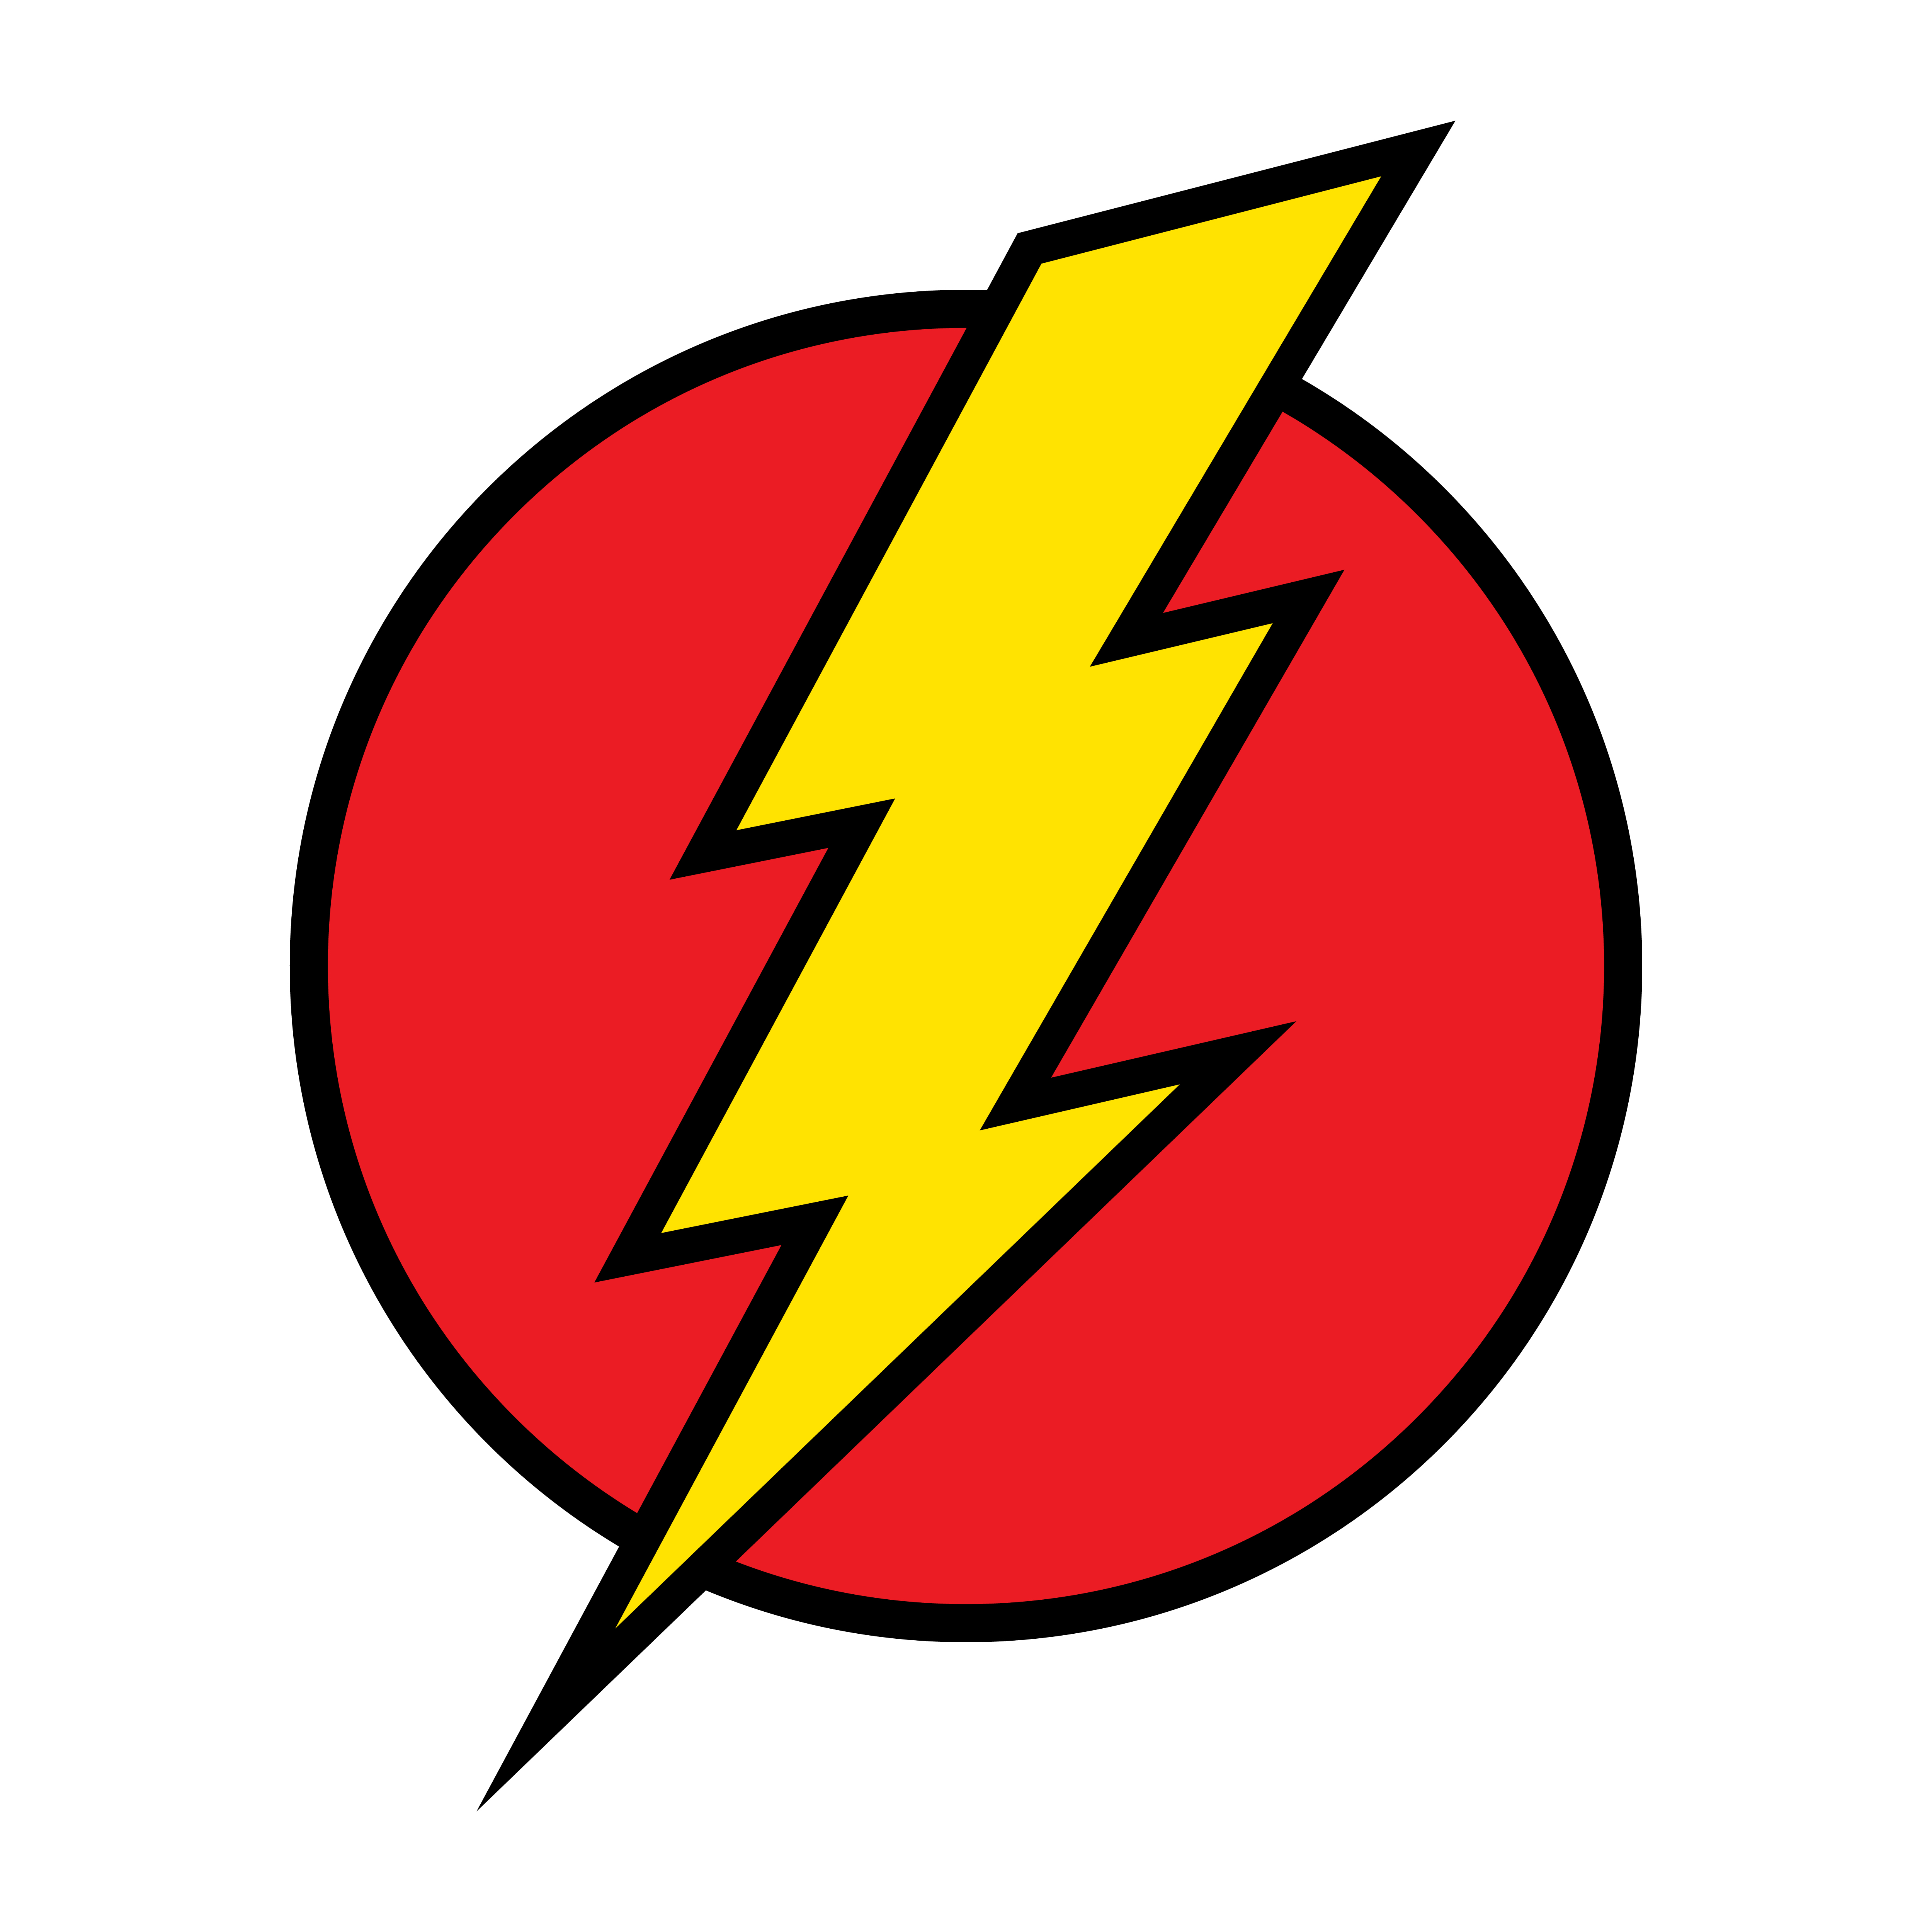 Electric Lightning Bolt 551317 Download Free Vectors